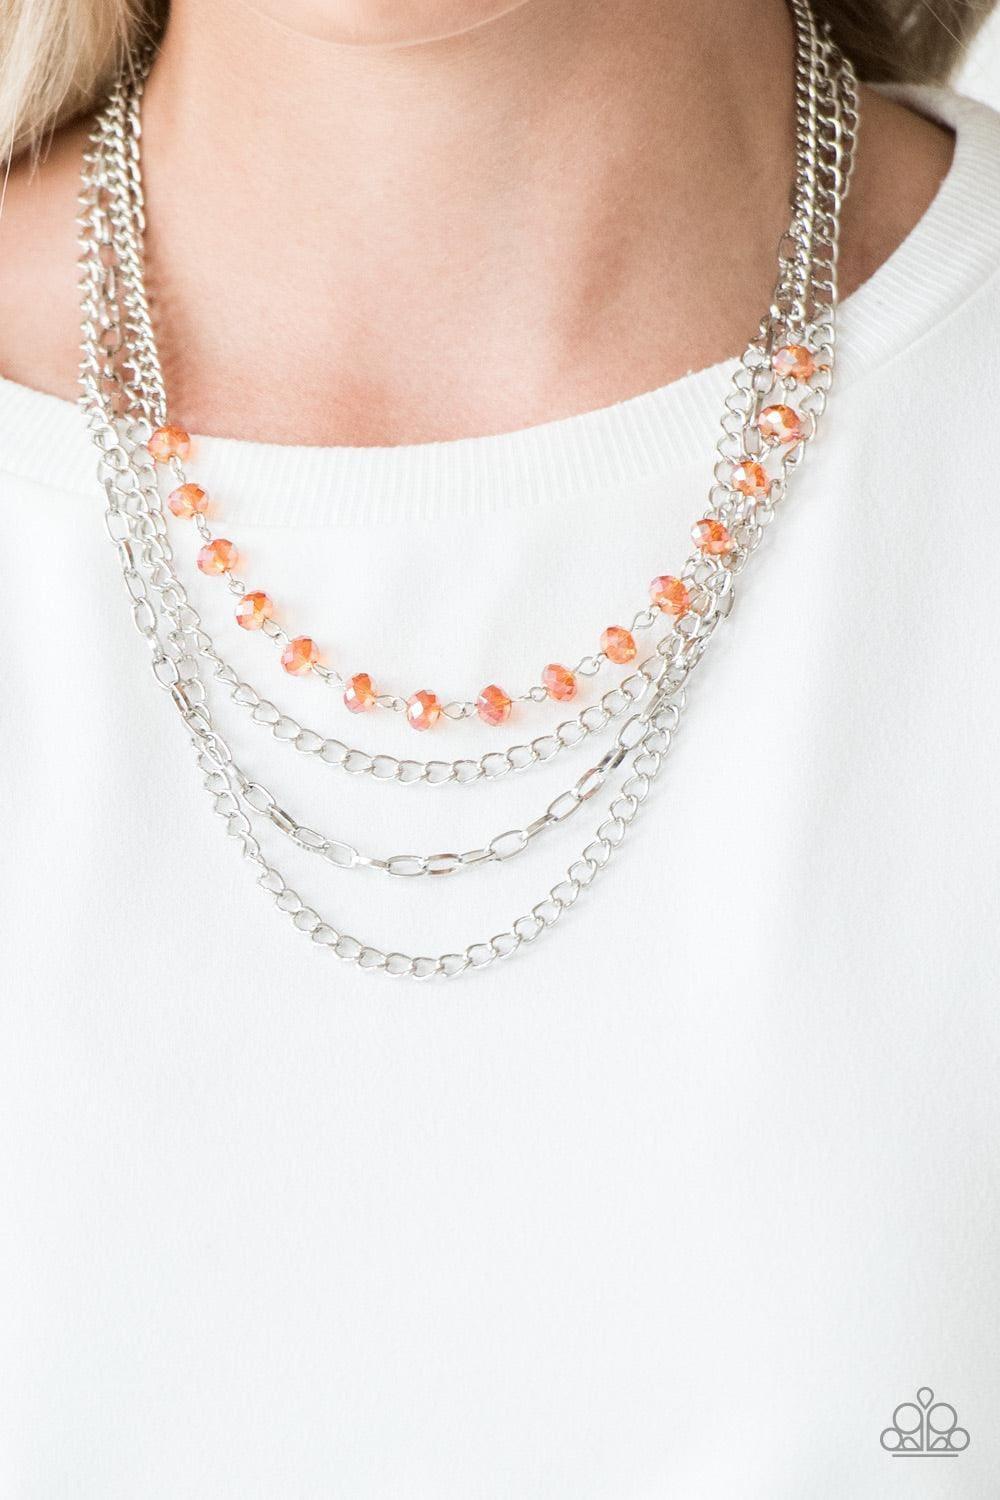 Paparazzi Accessories - Extravagant Elegance - Orange Necklace - Bling by JessieK